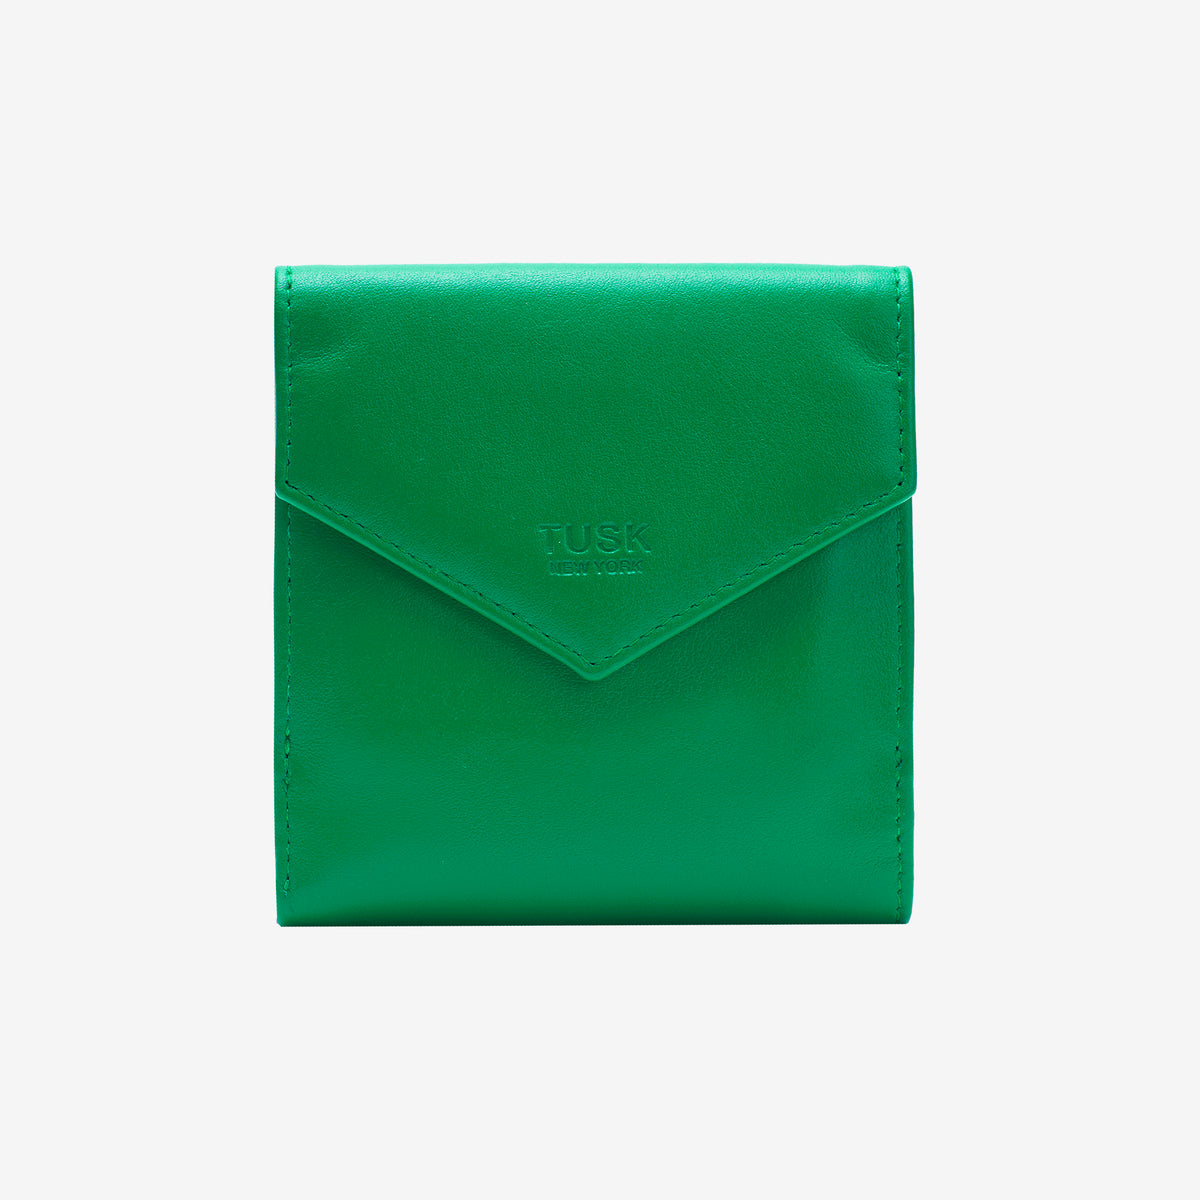     tusk-386-joy-smooth-leather-lshaped-indexer-emerald-front